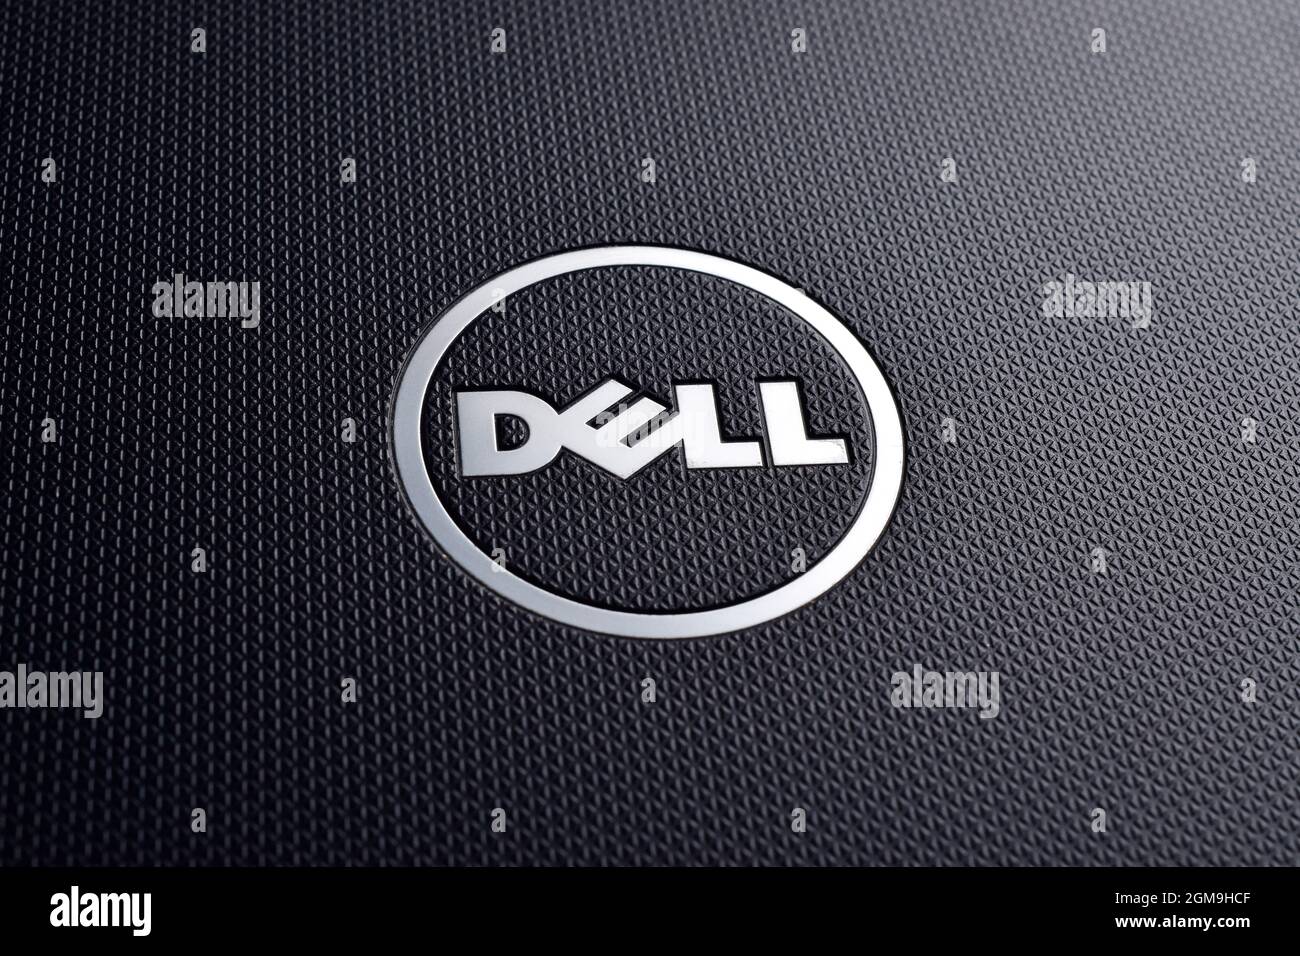 INDIA, DELHI - februaryr 12, 2019: Dell logo on textured black laptop, close up Stock Photo